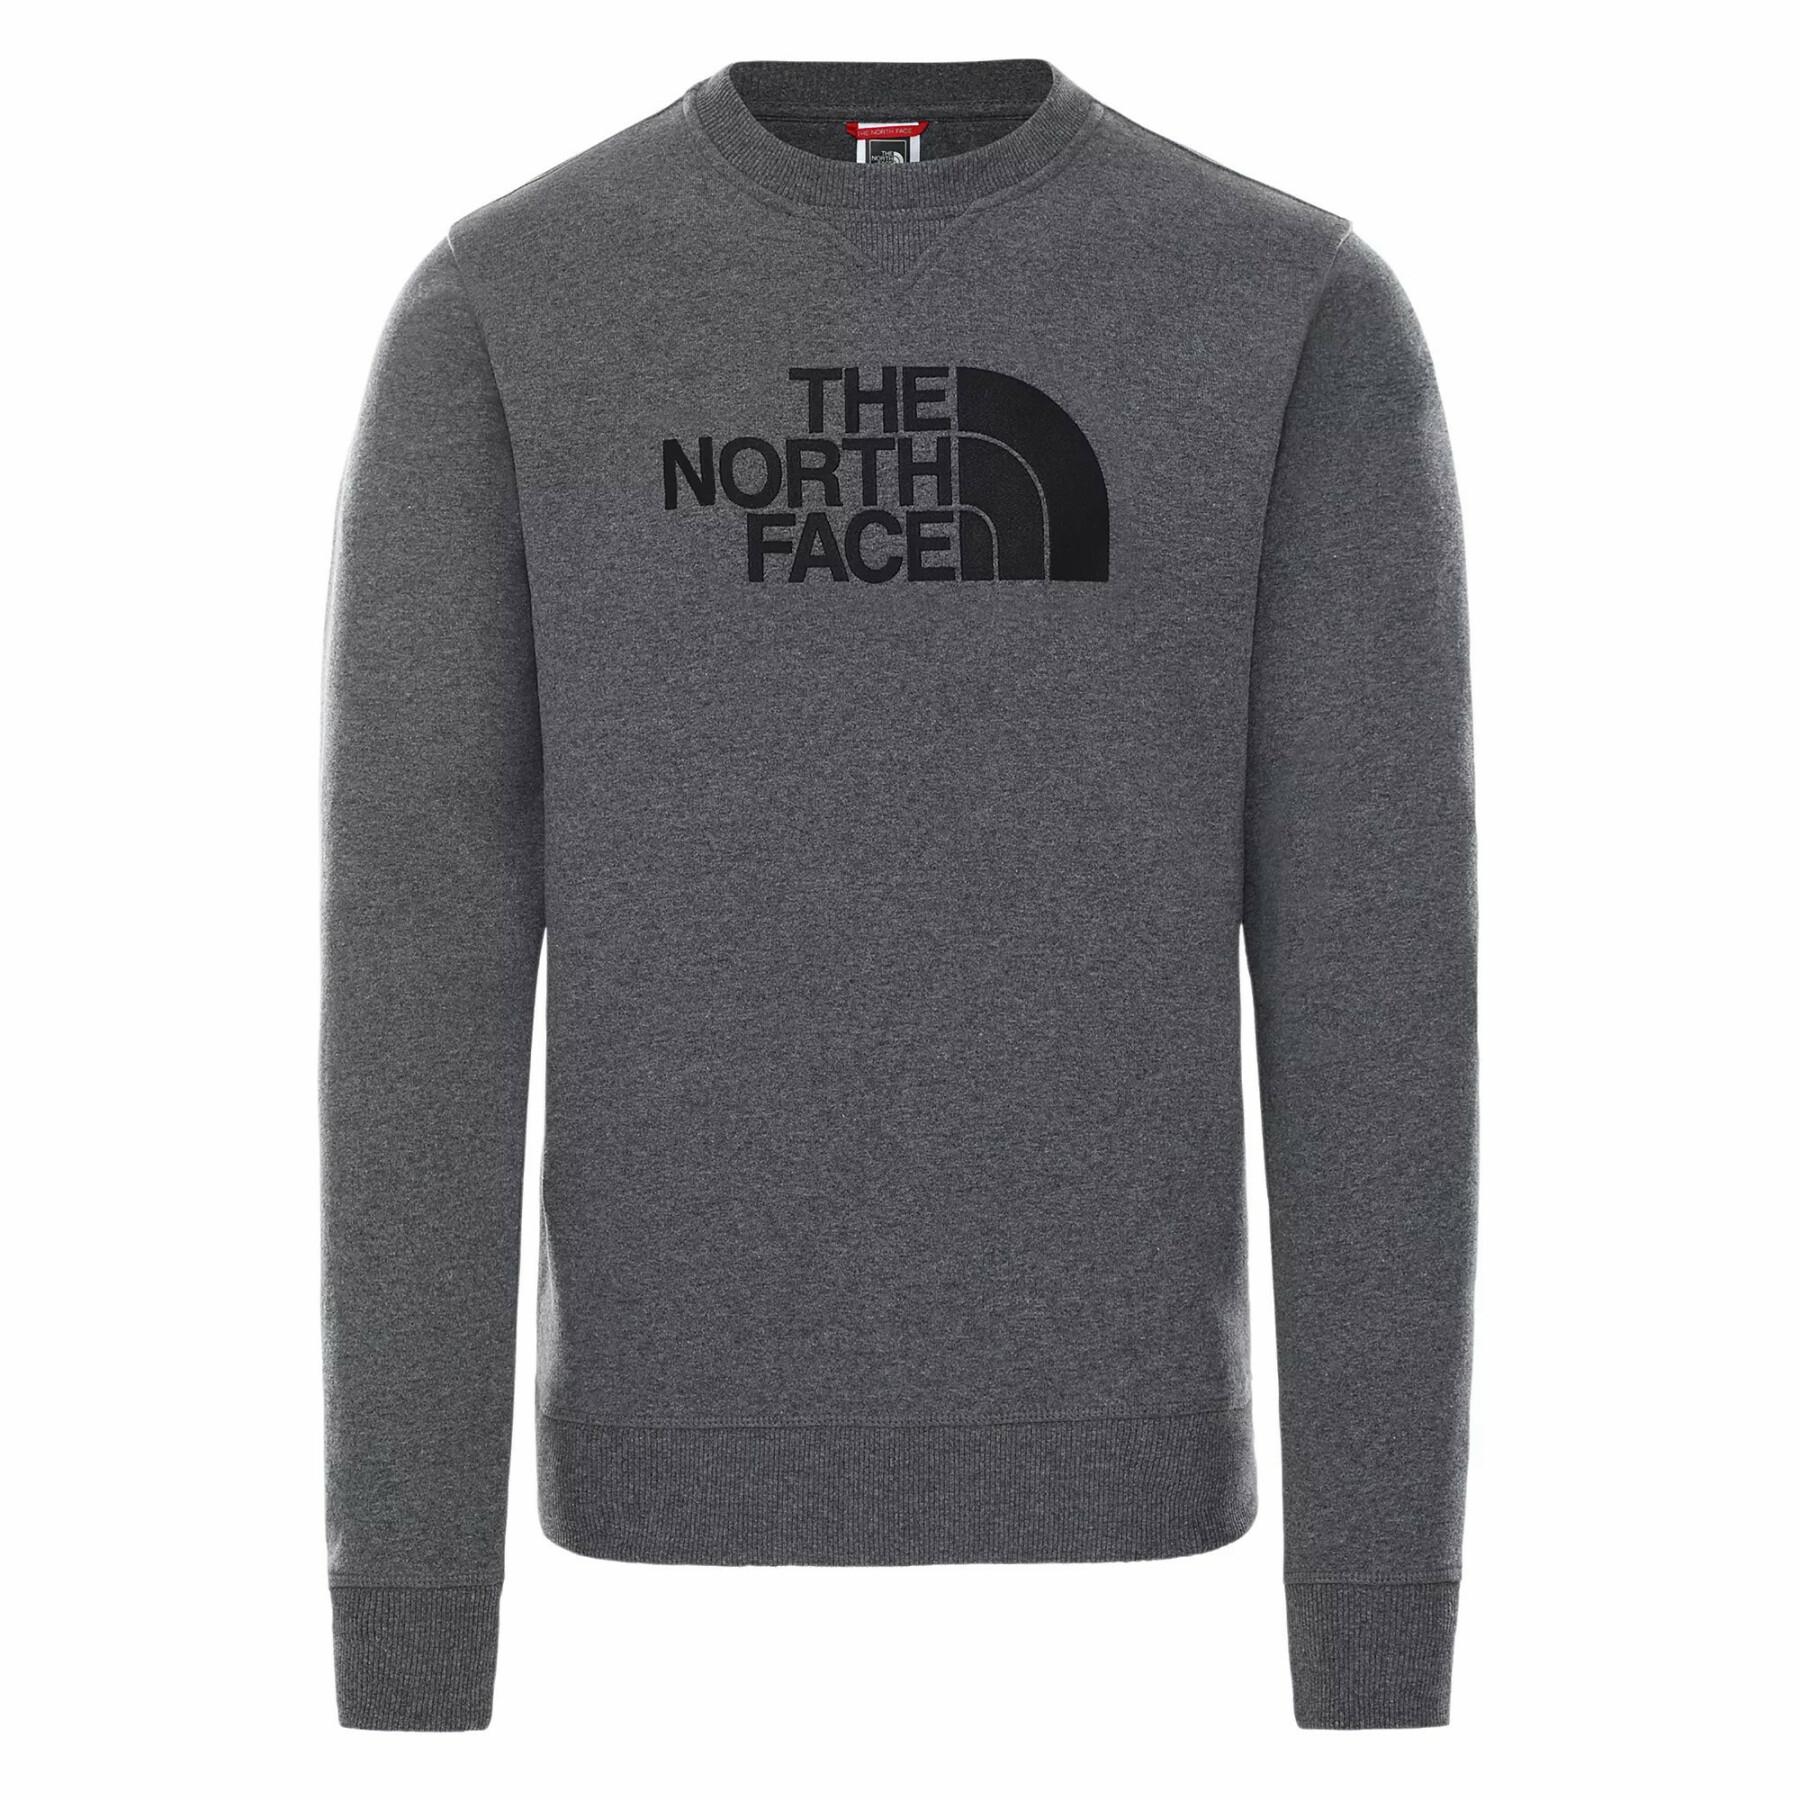 Hooded sweatshirt The North Face Drew Peak Crew